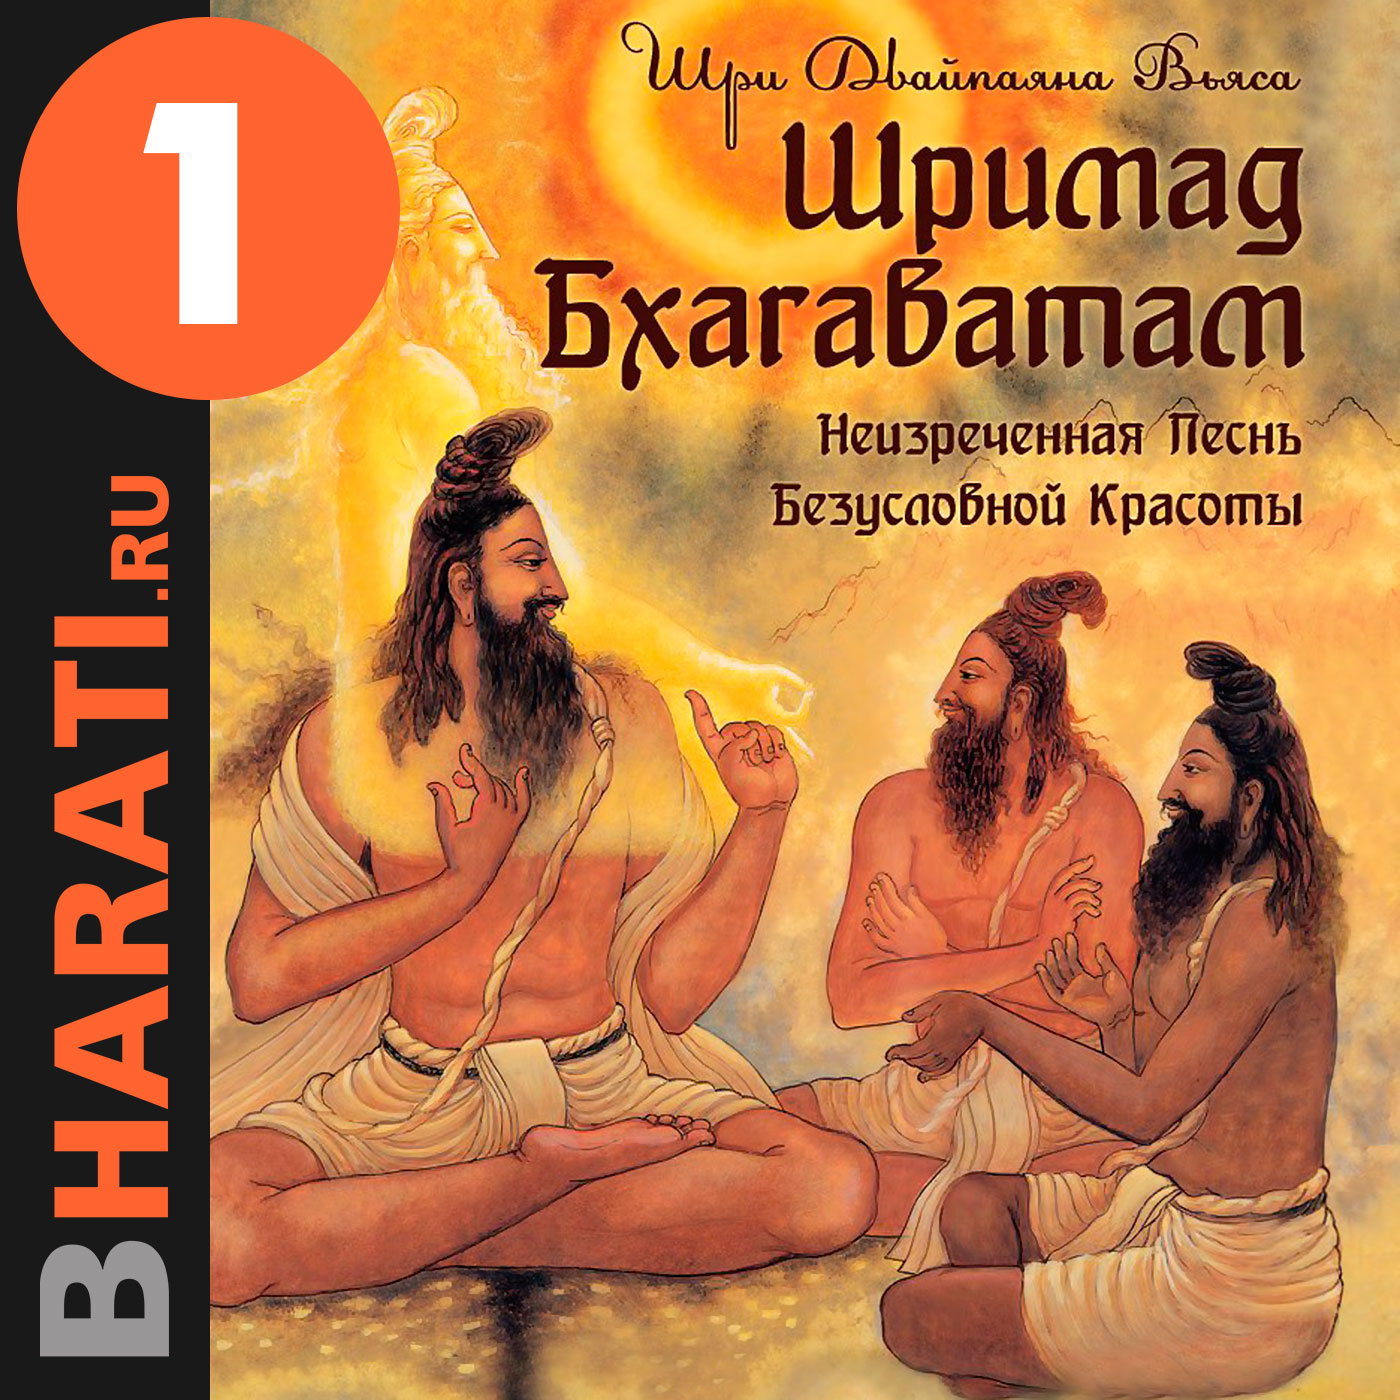 Аудиокнига "Шримад Бхагаватам". Книга 1: "Песнь Красоте"